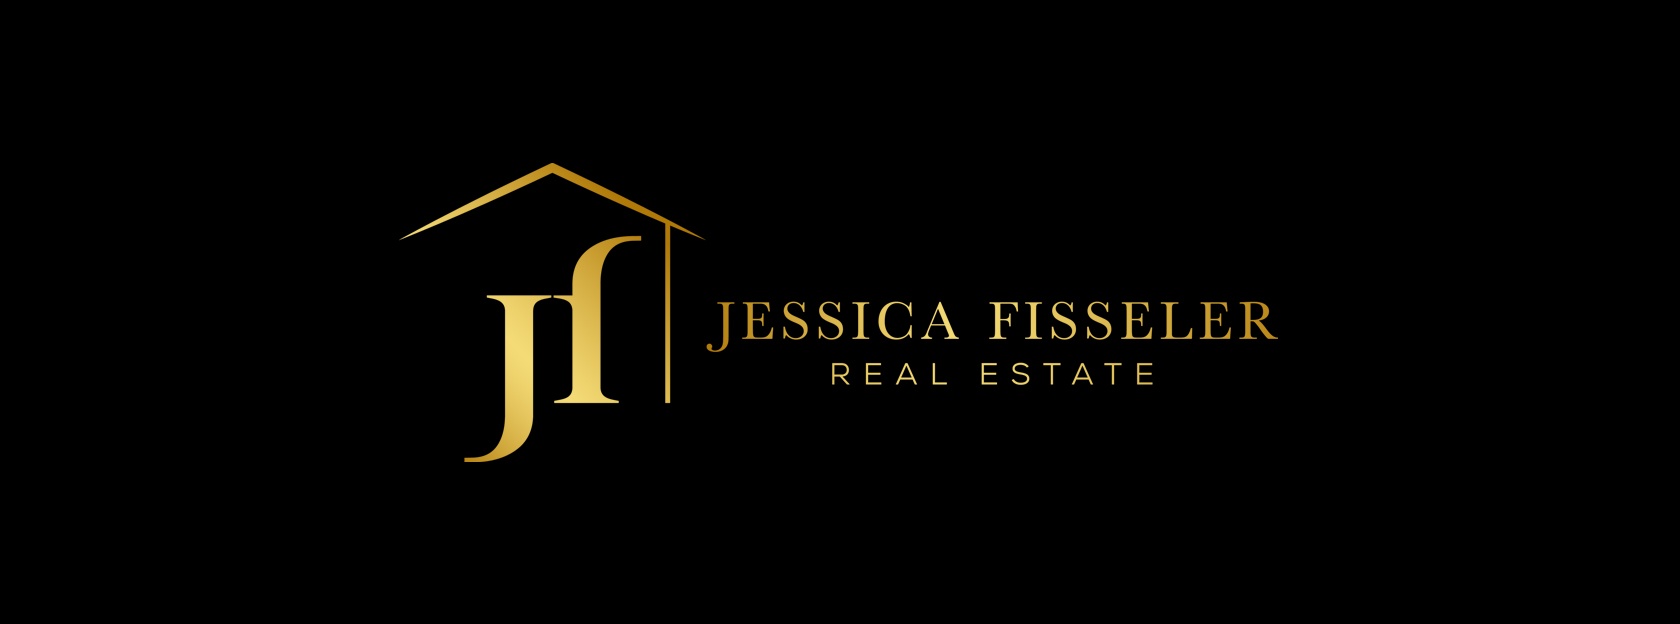 Jessica Fisseler Real Estate